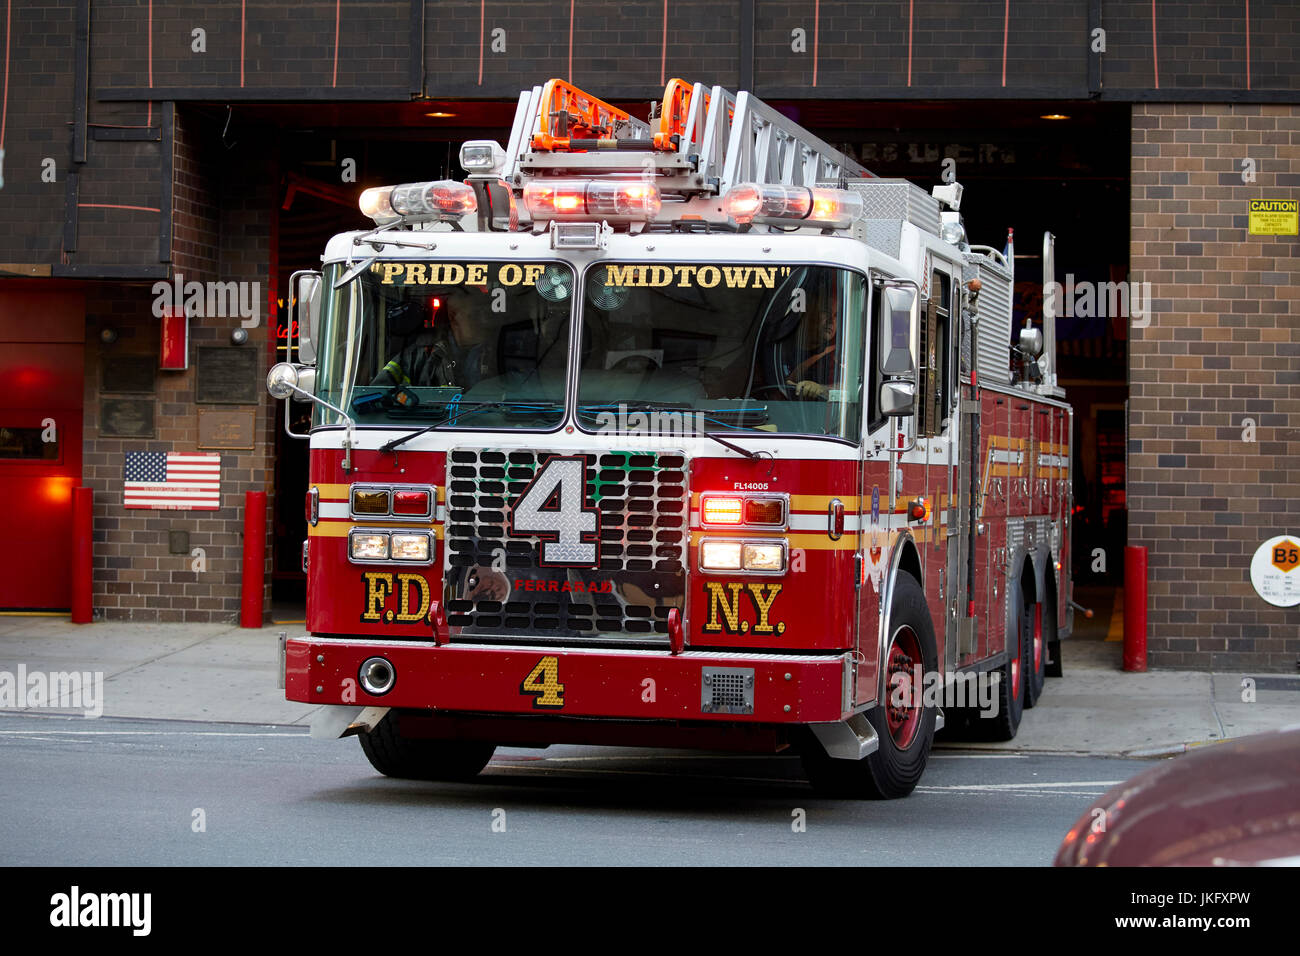 New York City Fire Dept Engine 54 Ladder 4 Battalion 9 Patch Midtown 